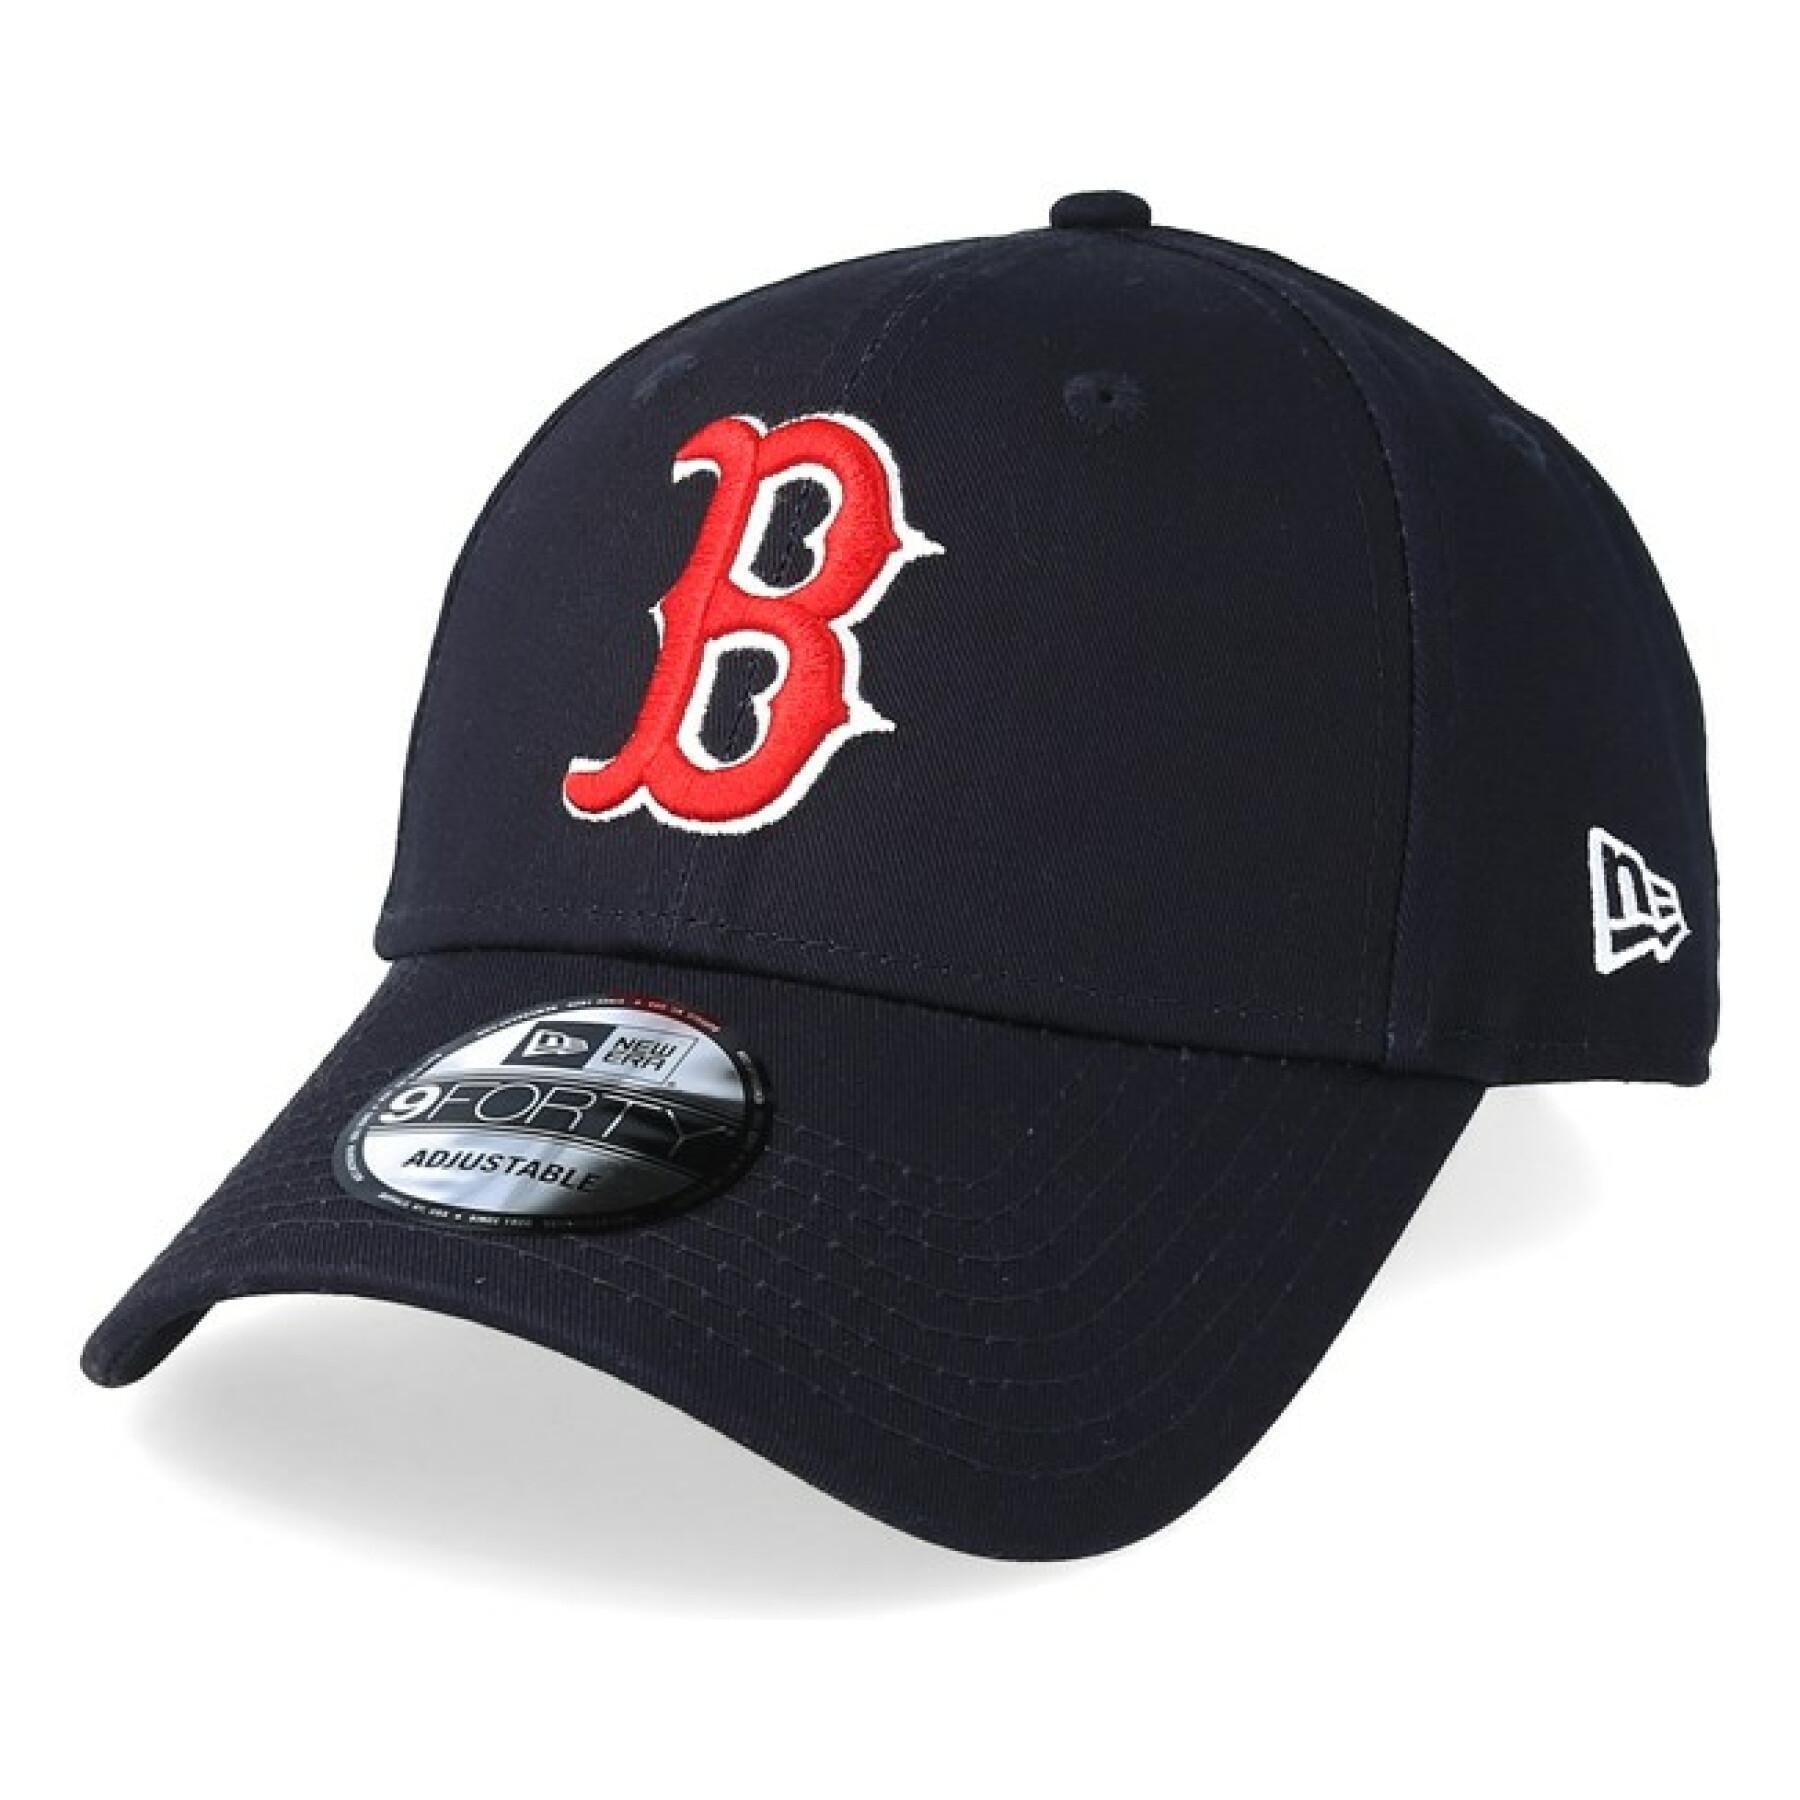 Gorra 9forty niños Boston Red Sox